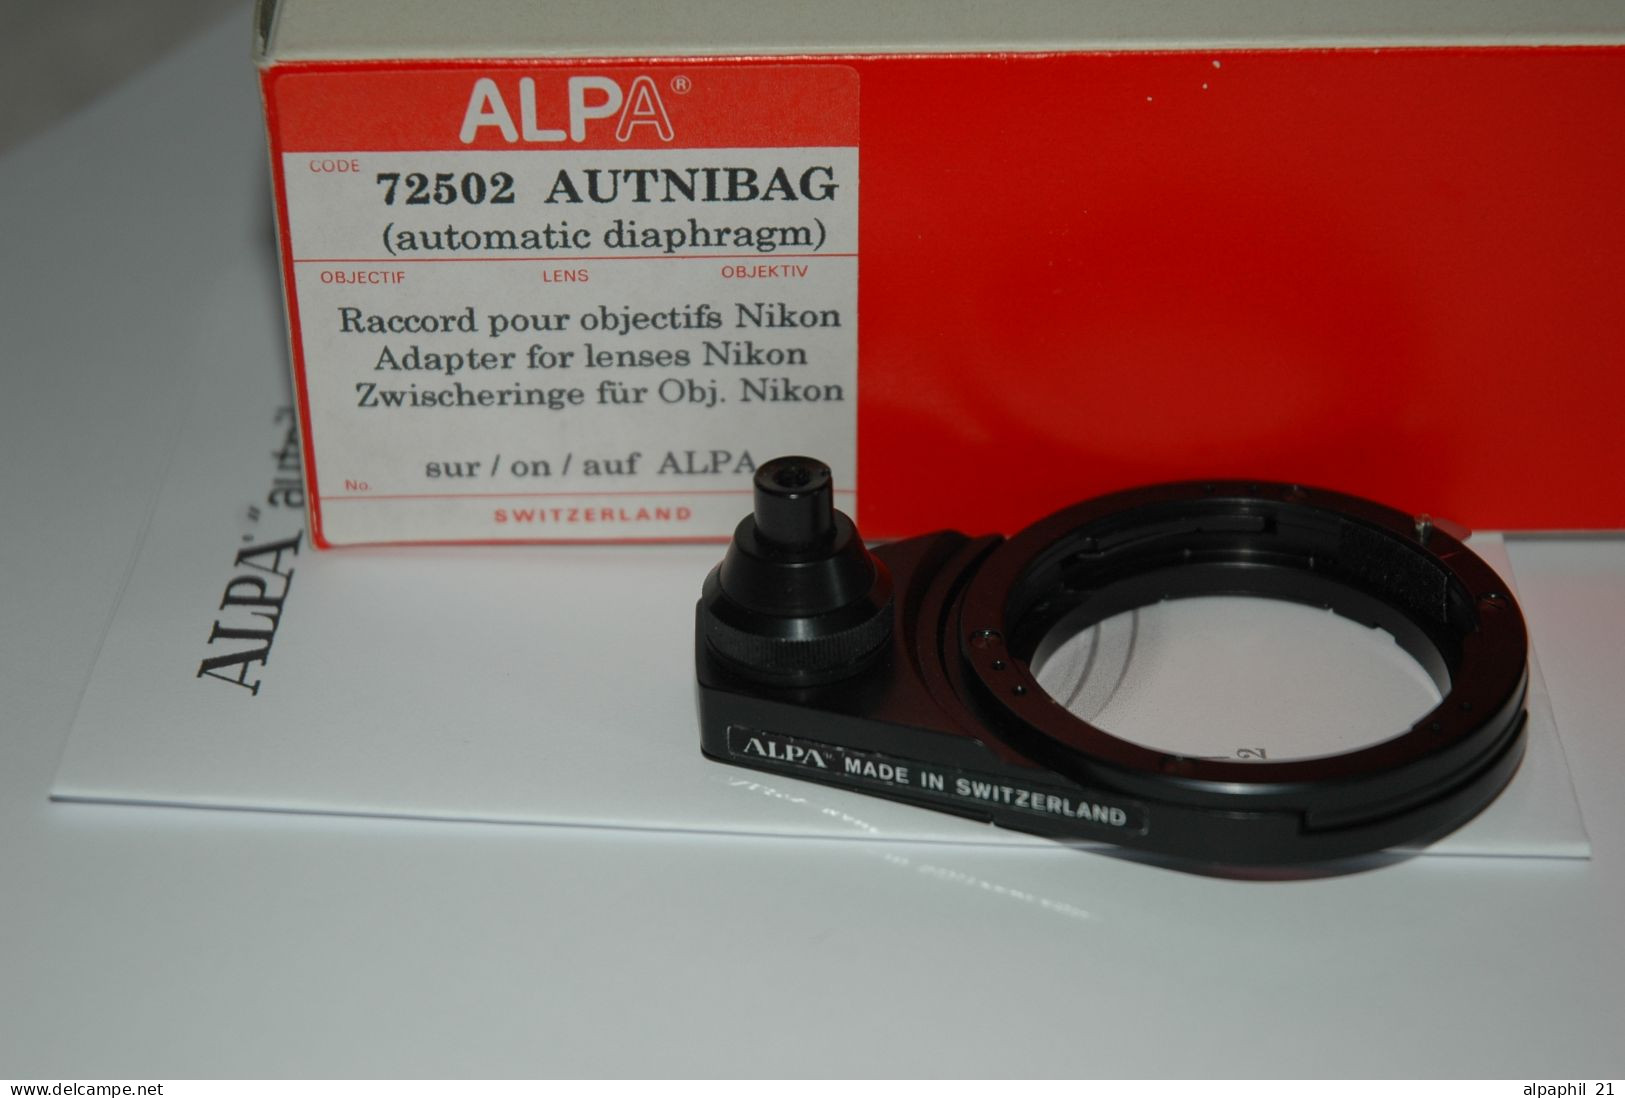 Alpa Autnibag "72502" - Materiale & Accessori